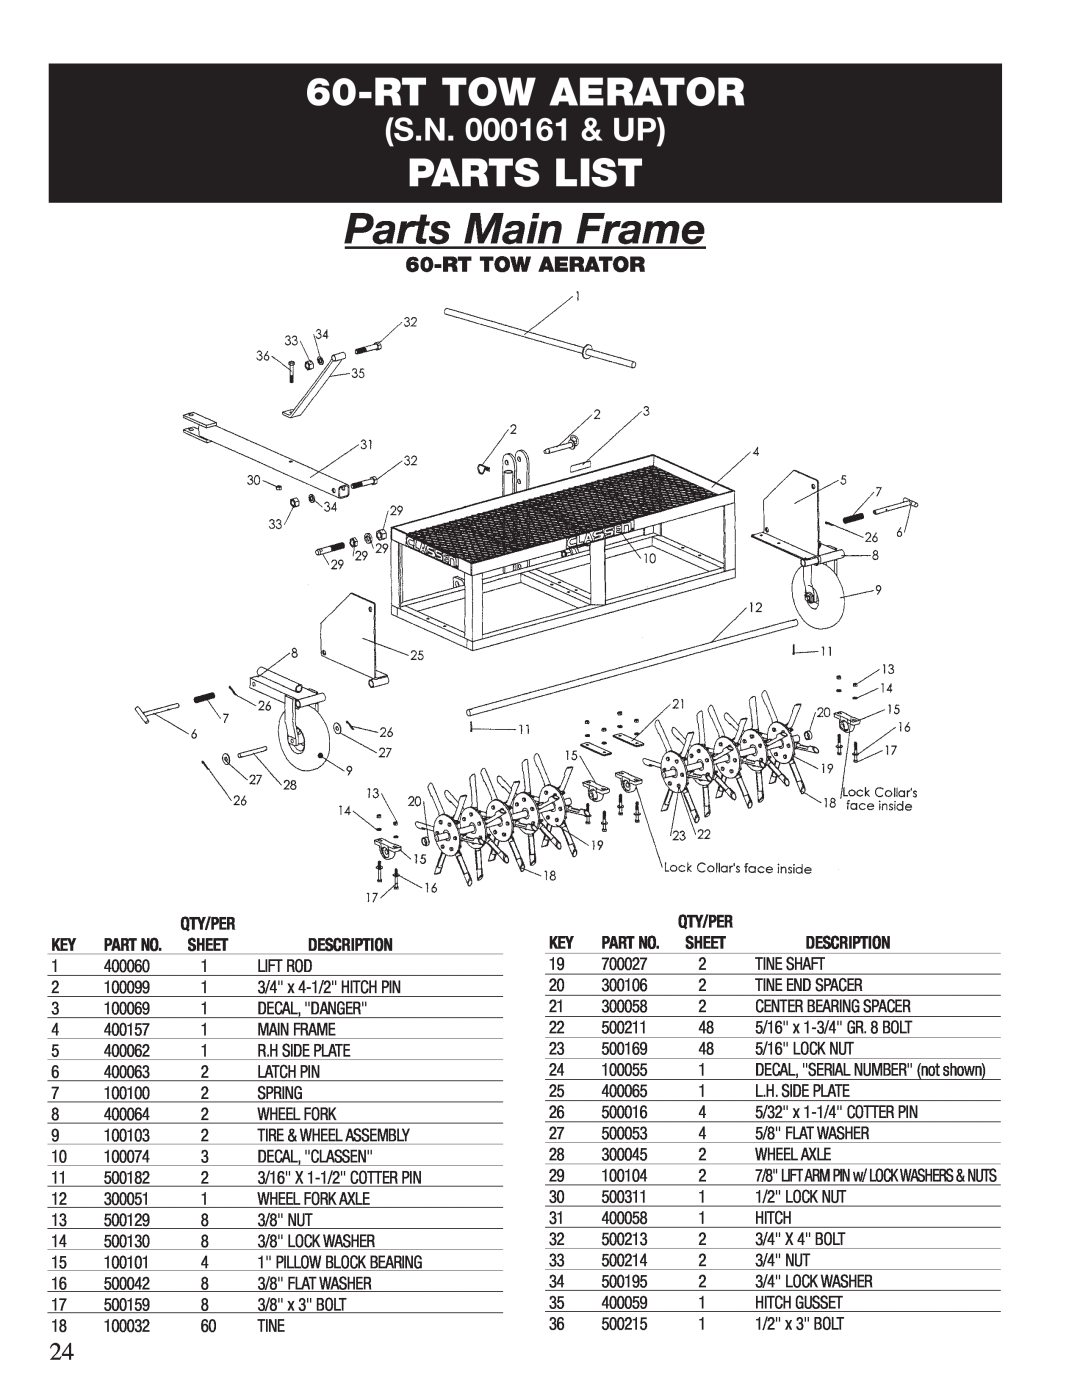 Classen 60-RT, TA-26D, TA-25D Rt Tow Aerator, S.N. 000161 & UP, Parts Main Frame, Parts List, Qty/Per, Sheet, Description 